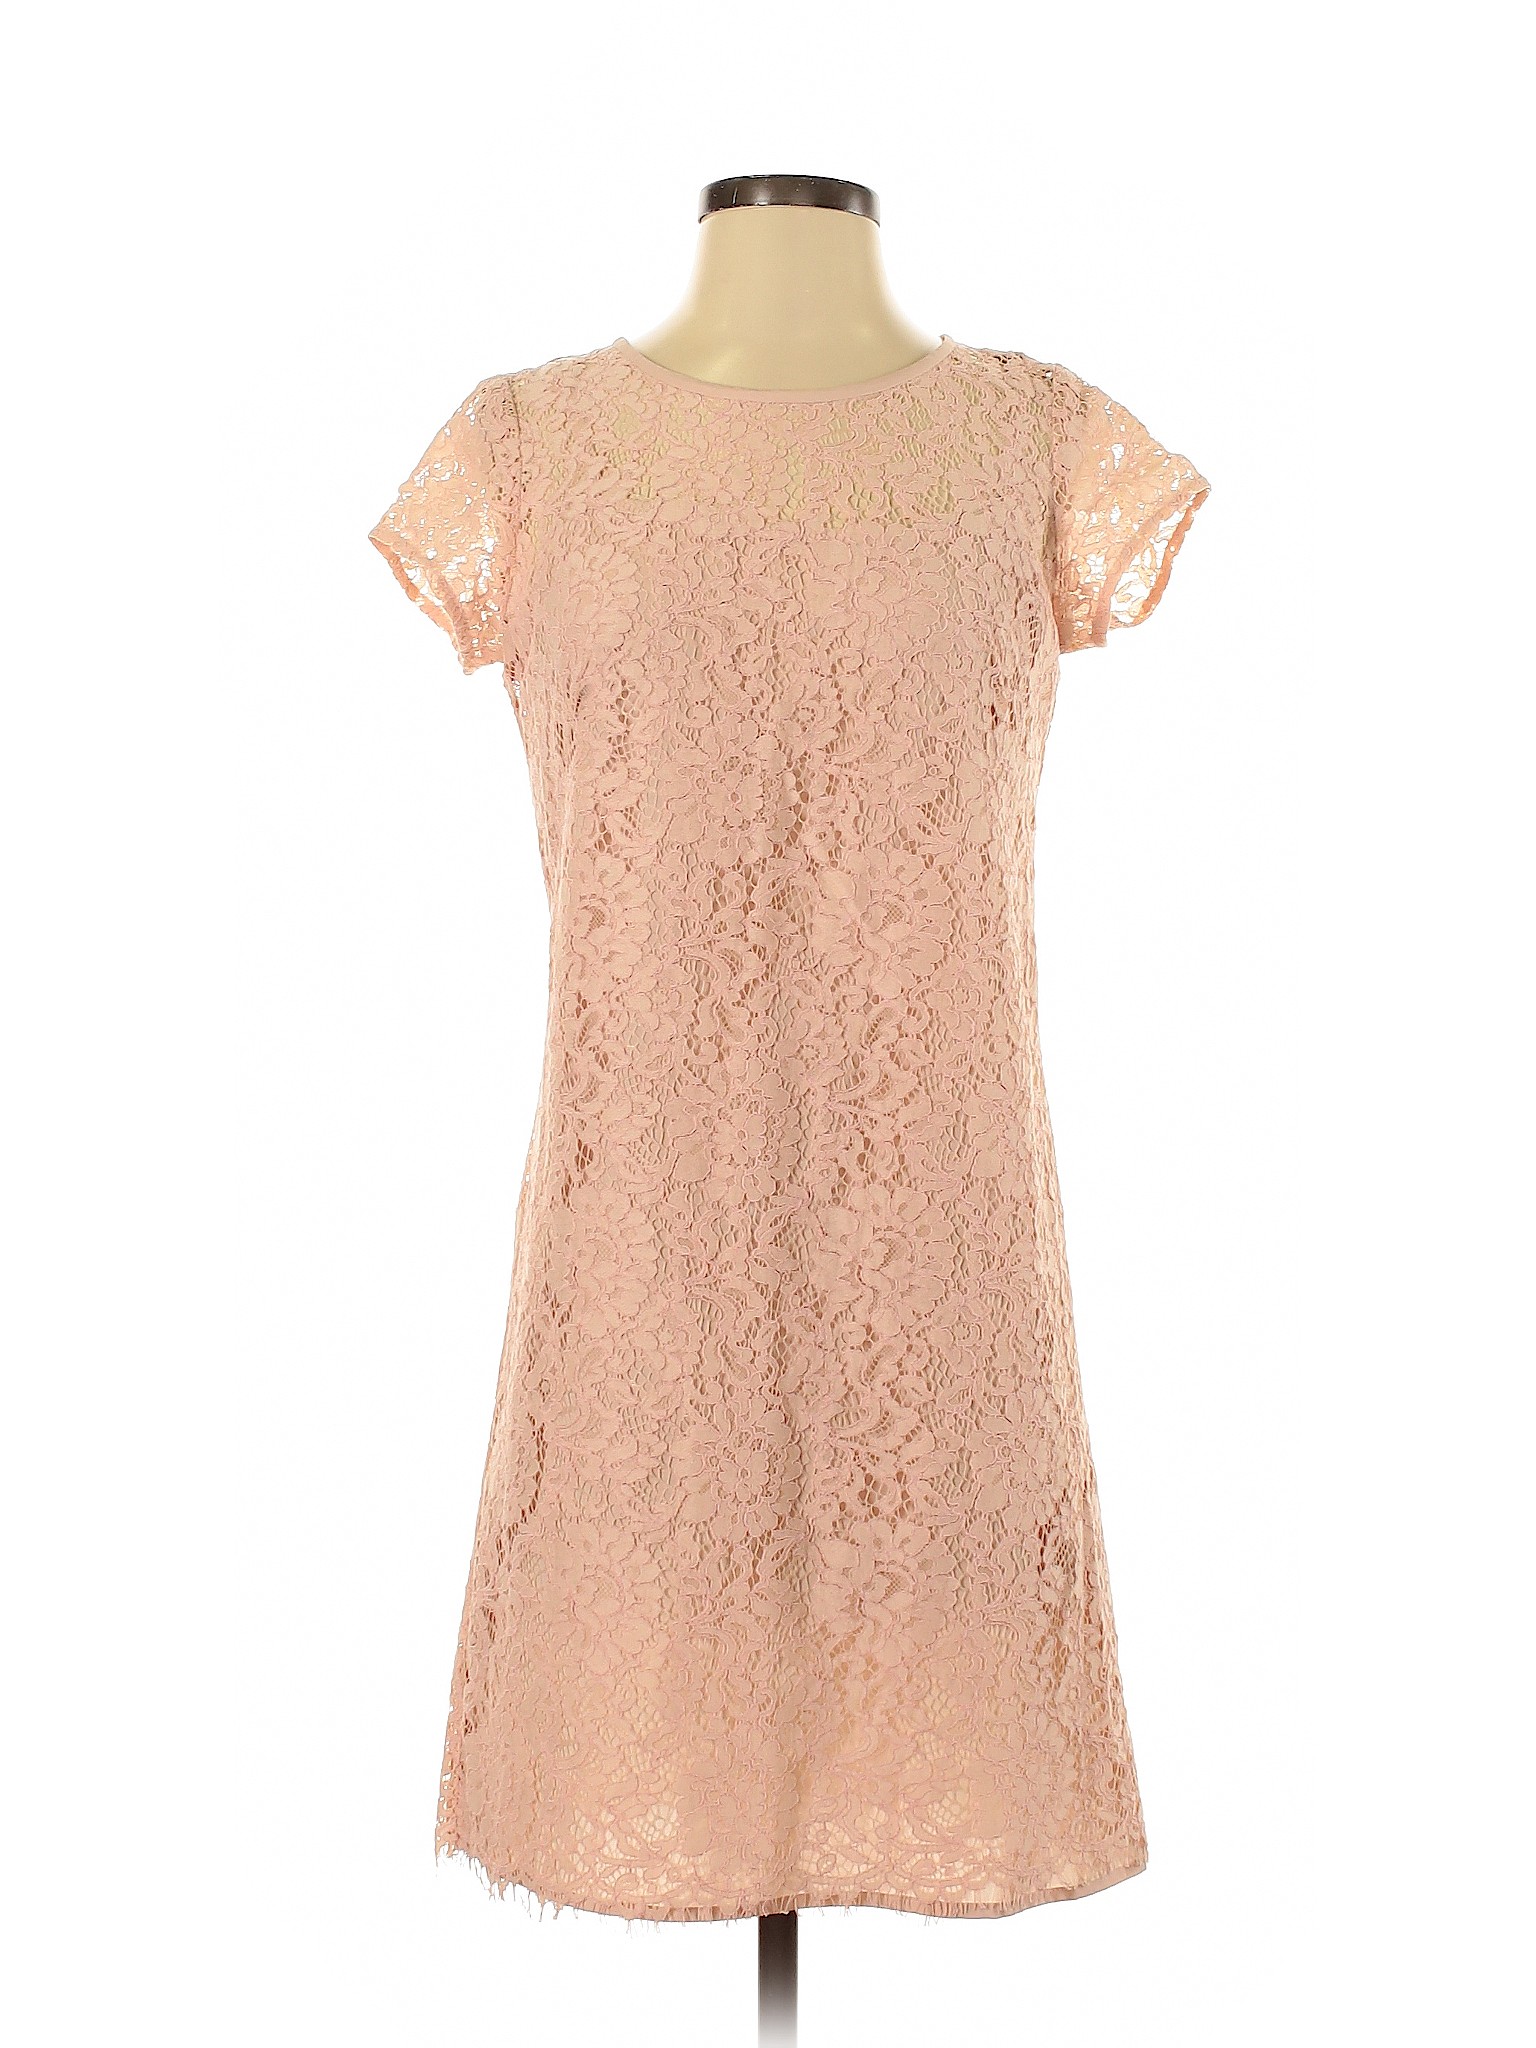 NWT Ann Taylor LOFT Women Pink Casual Dress 2 | eBay